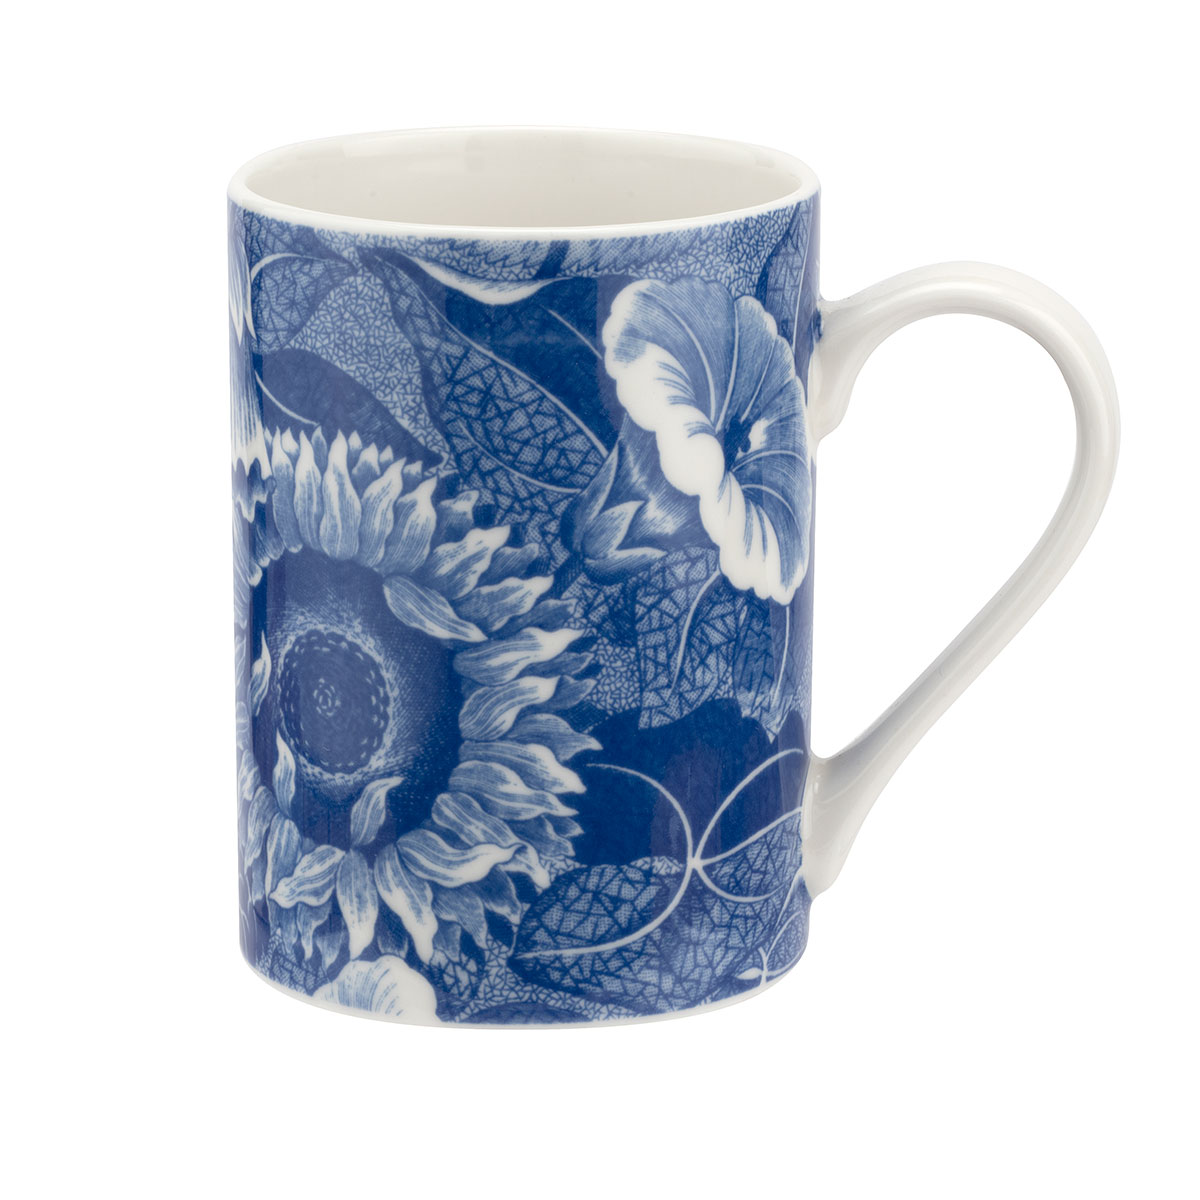 Spode Blue Room Sunflower Mug, Single